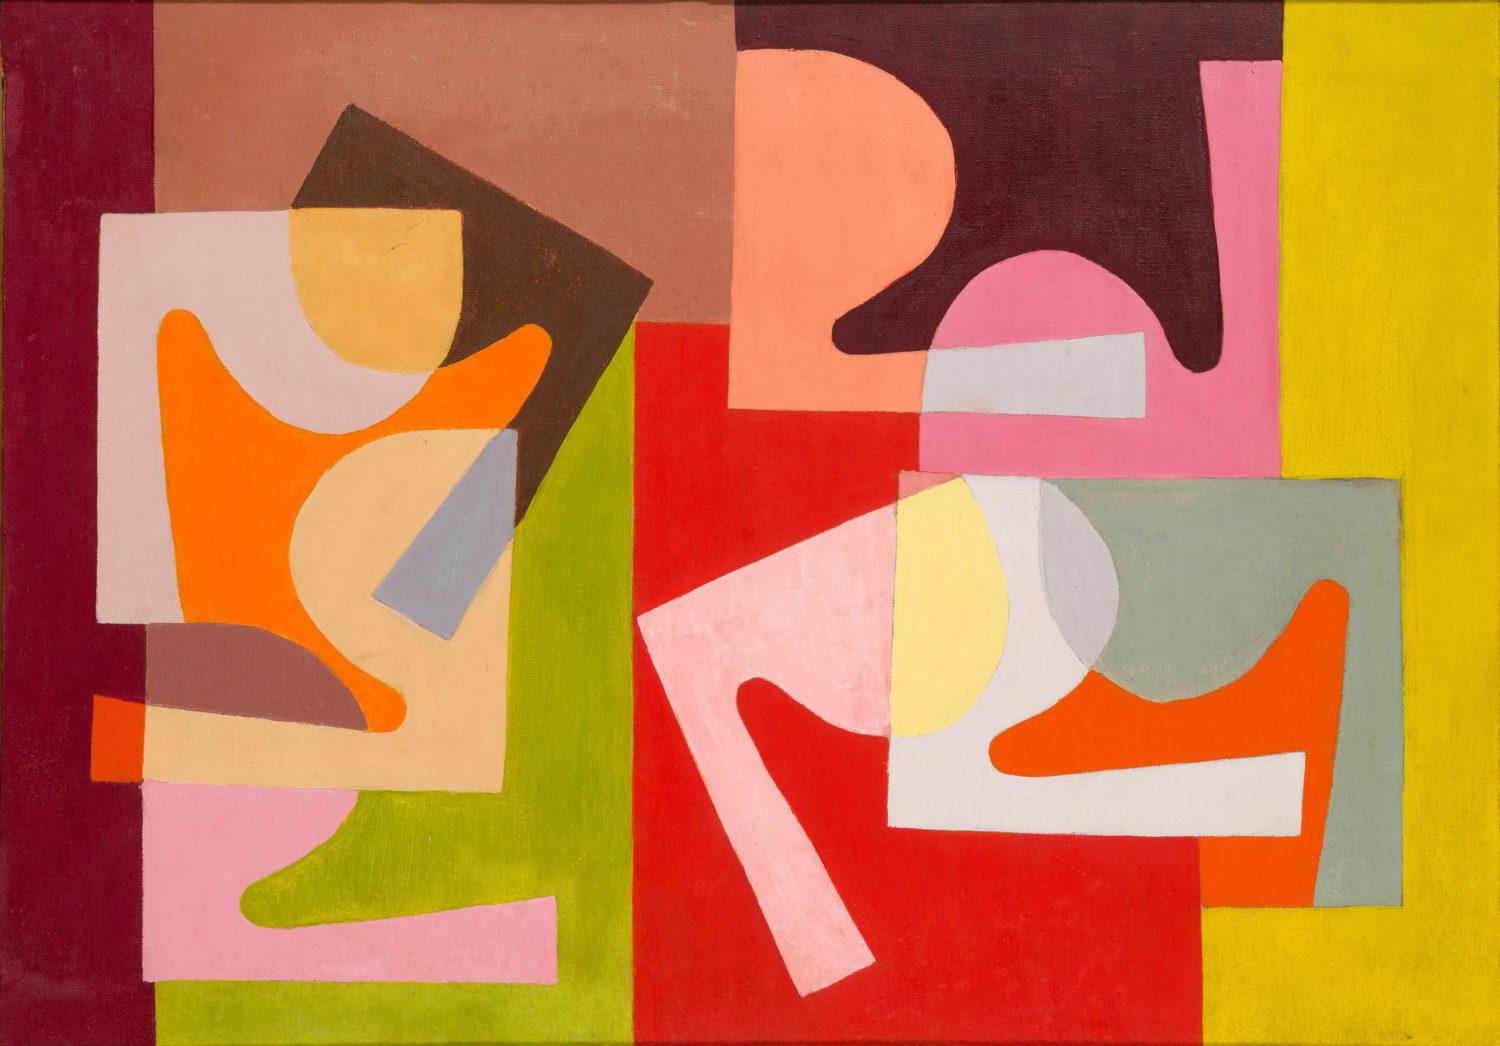 Saloua raouda choucair fraction module 1947 1951 colloue abstraction aware women artists artistes femmes 1500x1046